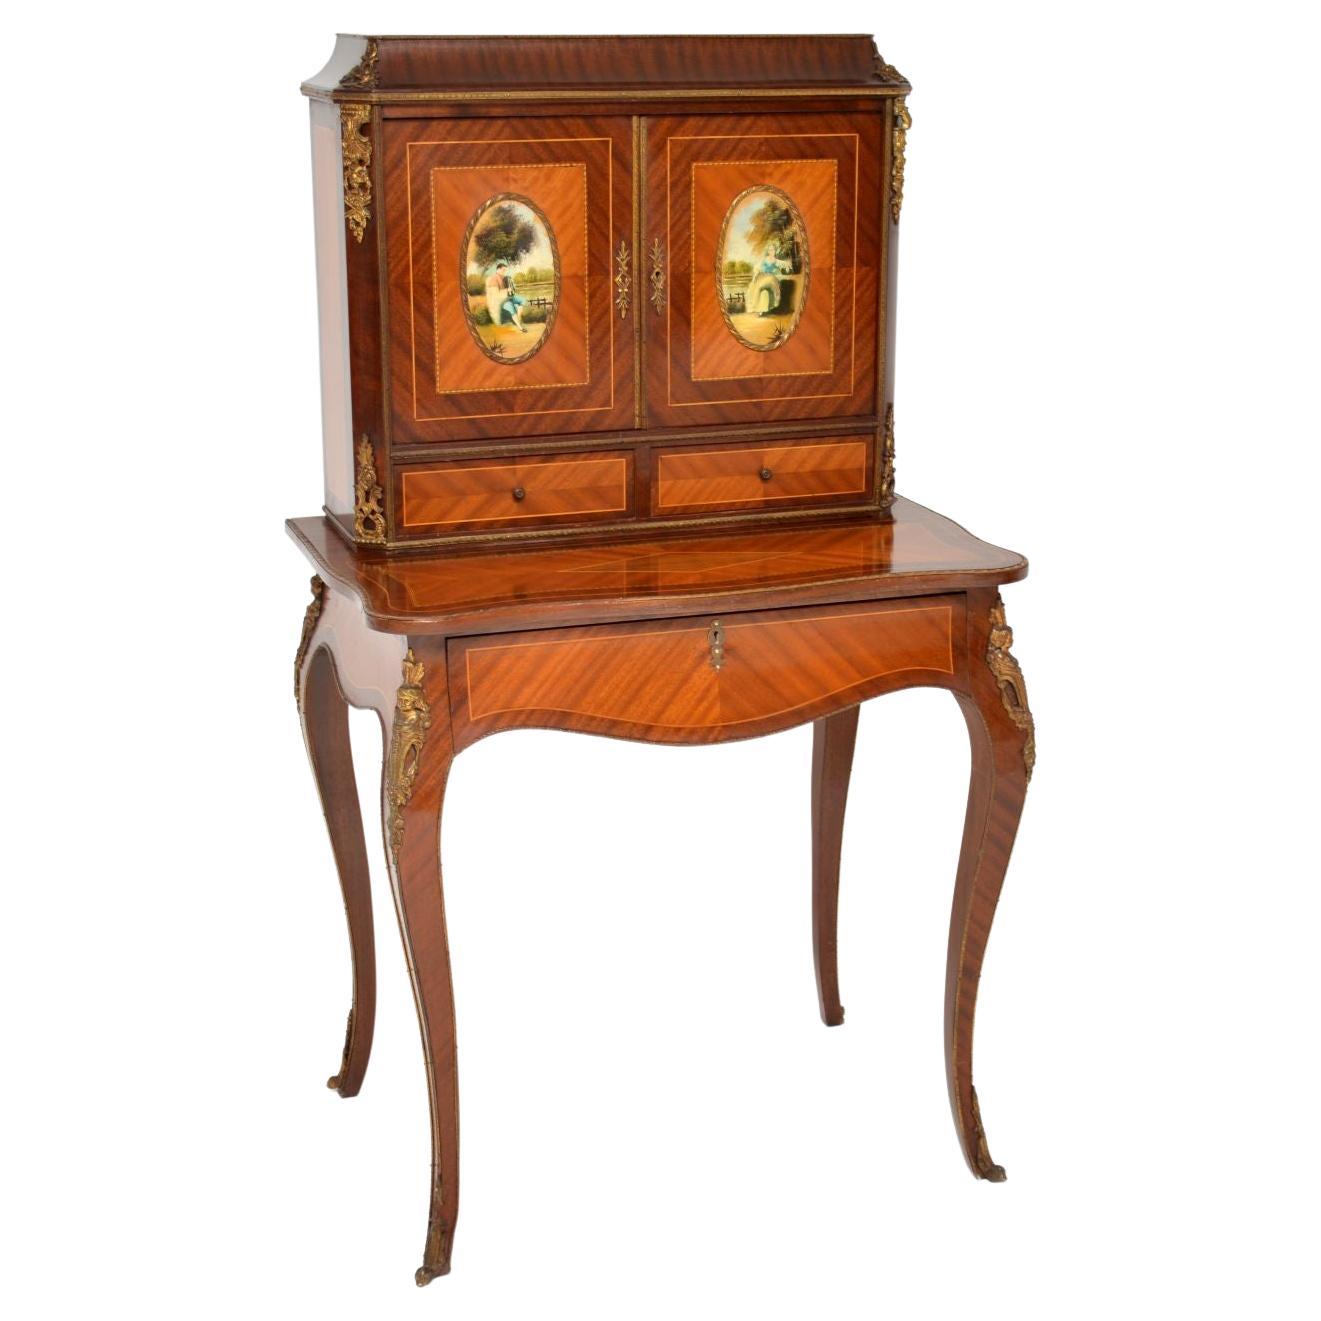 Antique French Ormolu Mounted Escritoire Writing Desk For Sale